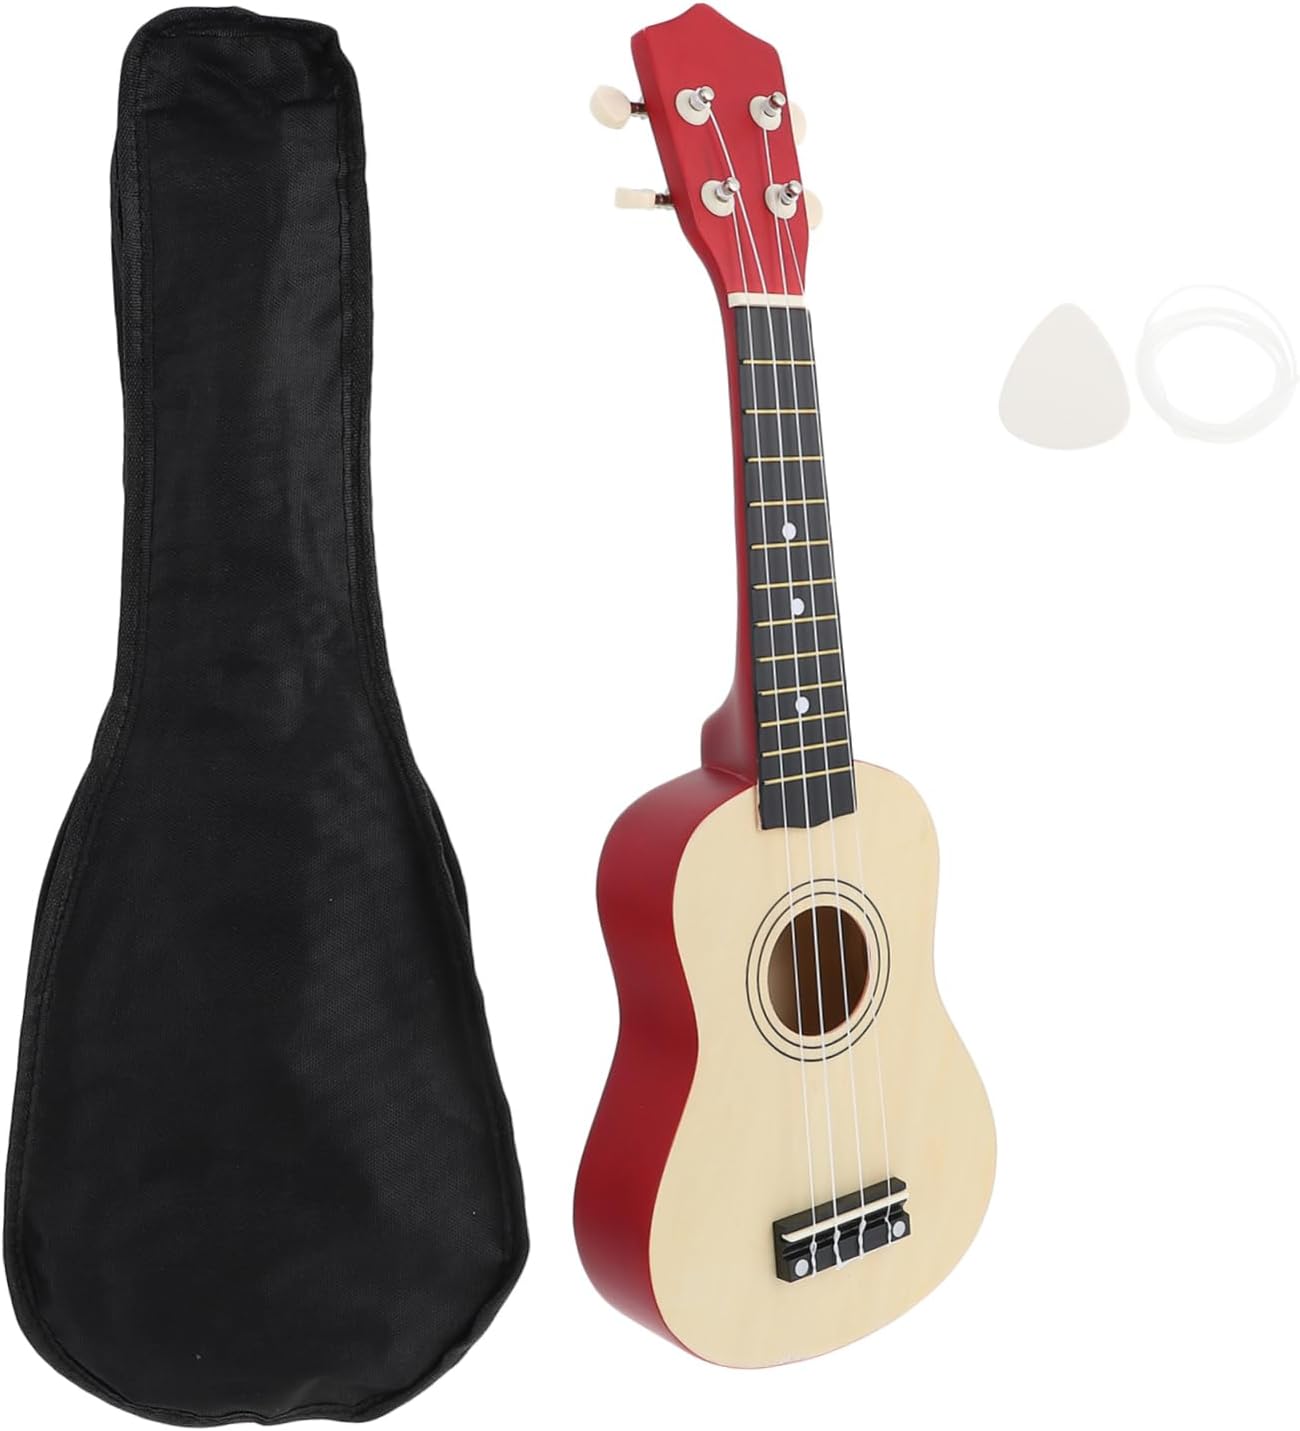 SUPVOX 1set Wooden Ukulele Child Portable Small Guitar High Environmental Protection Paint